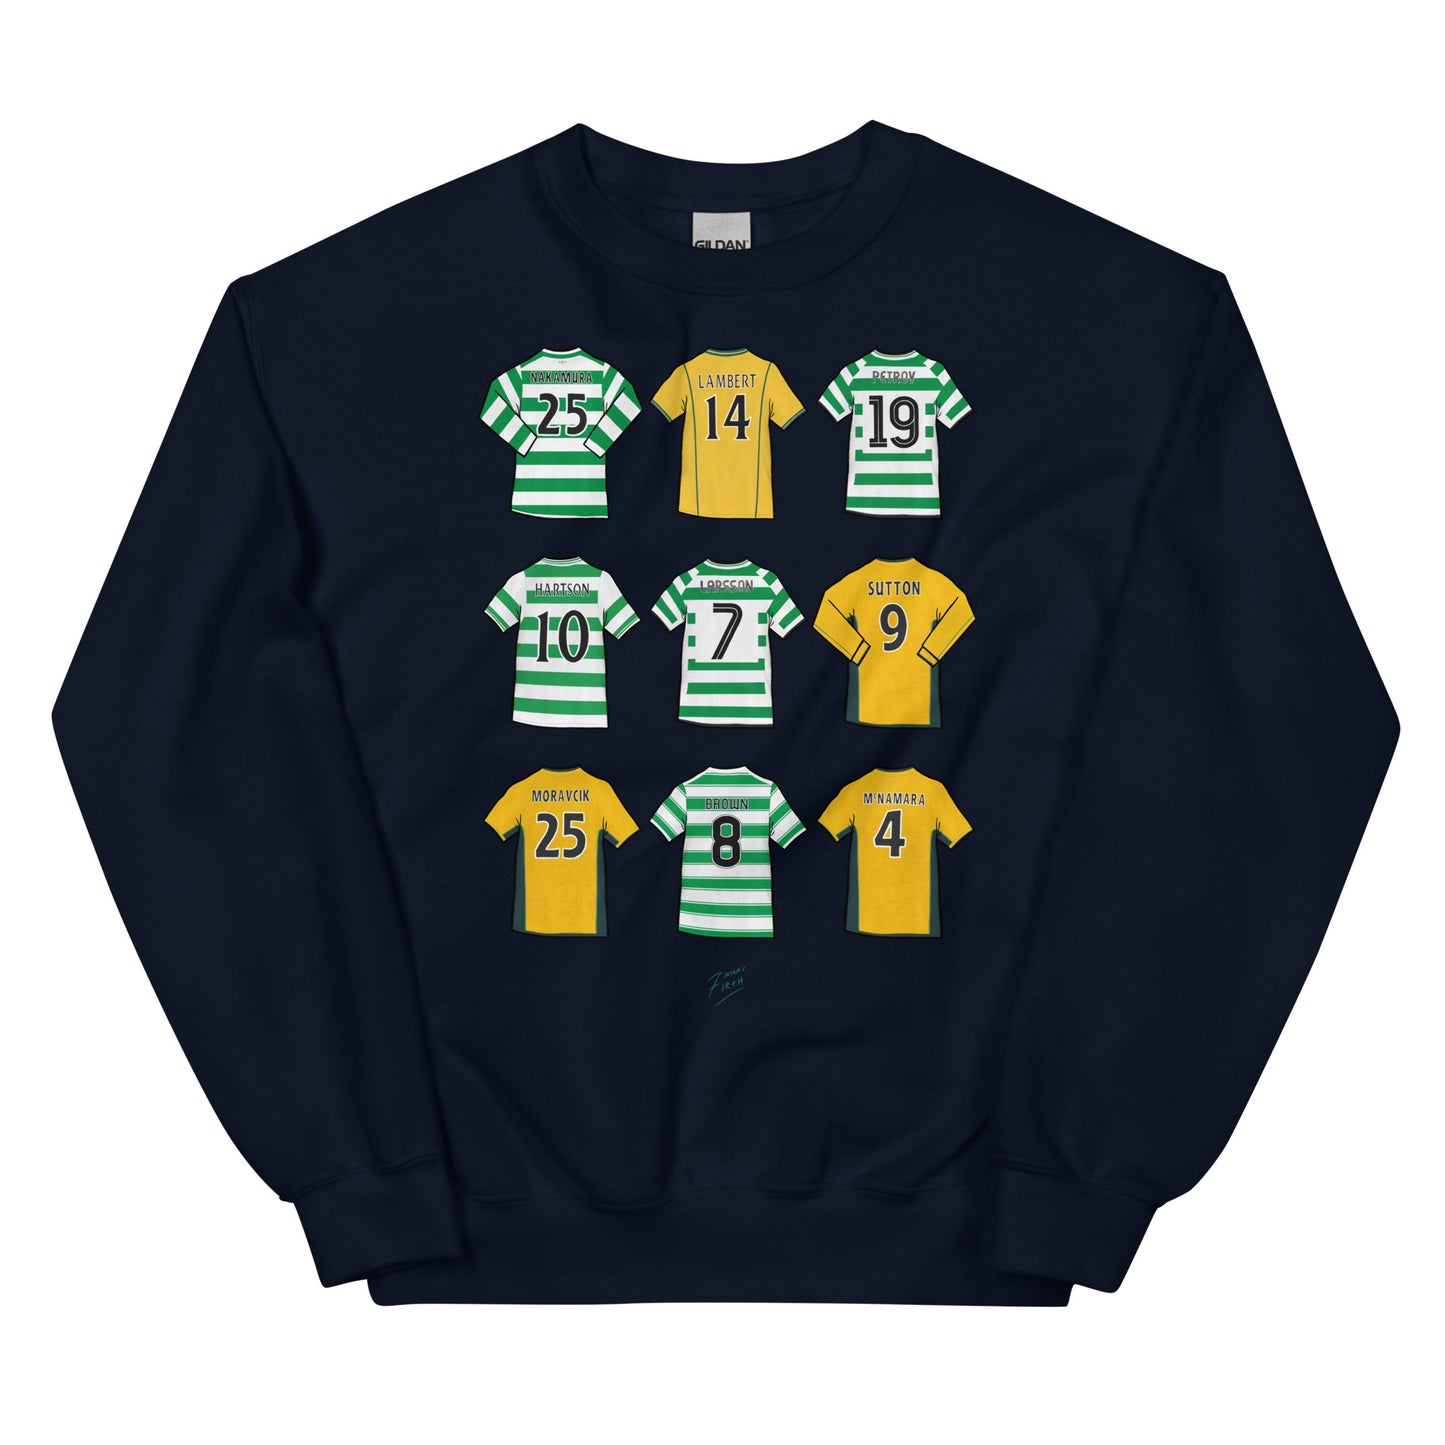 Navy blue Sweatshirt Glasgow Celtic inspired, legends of the club illustrated artwork featuring names such as Nakamura, Chris Sutton, John Harrison, Henrik Larsson, Scott Brown & more